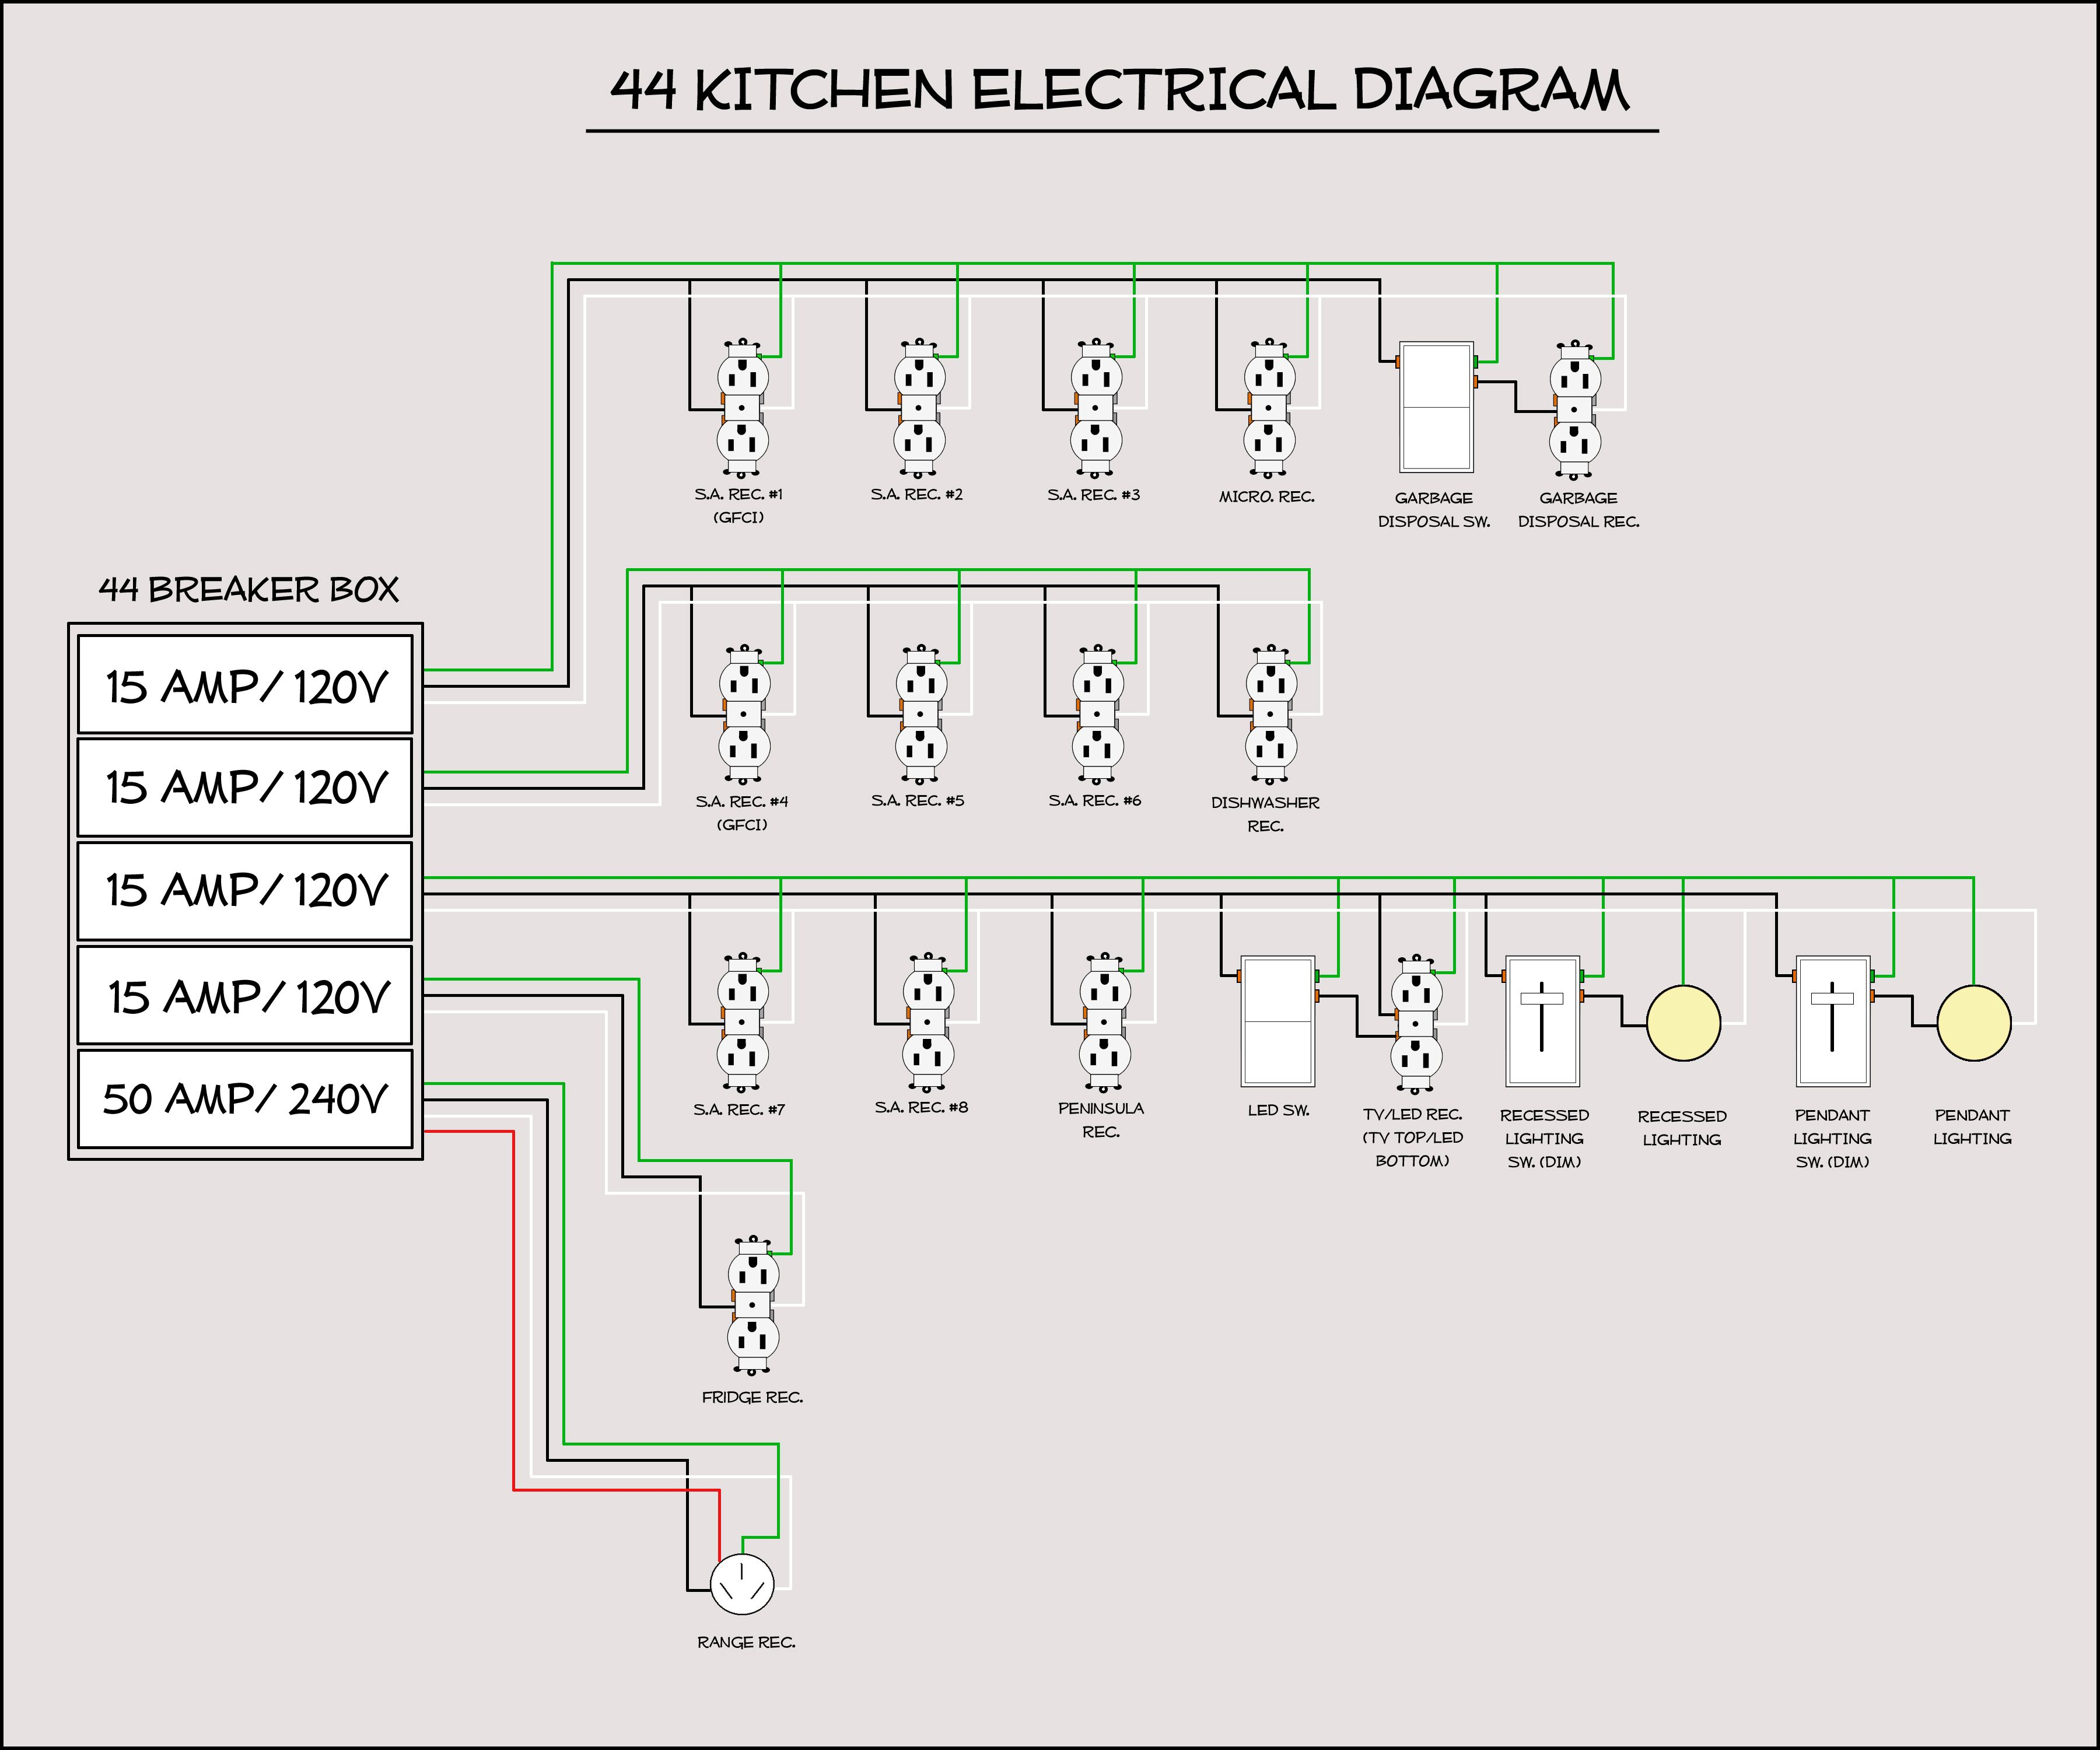 Electrical Wiring Diagram Kitchen | Wiring Diagram - Kitchen Electrical Wiring Diagram